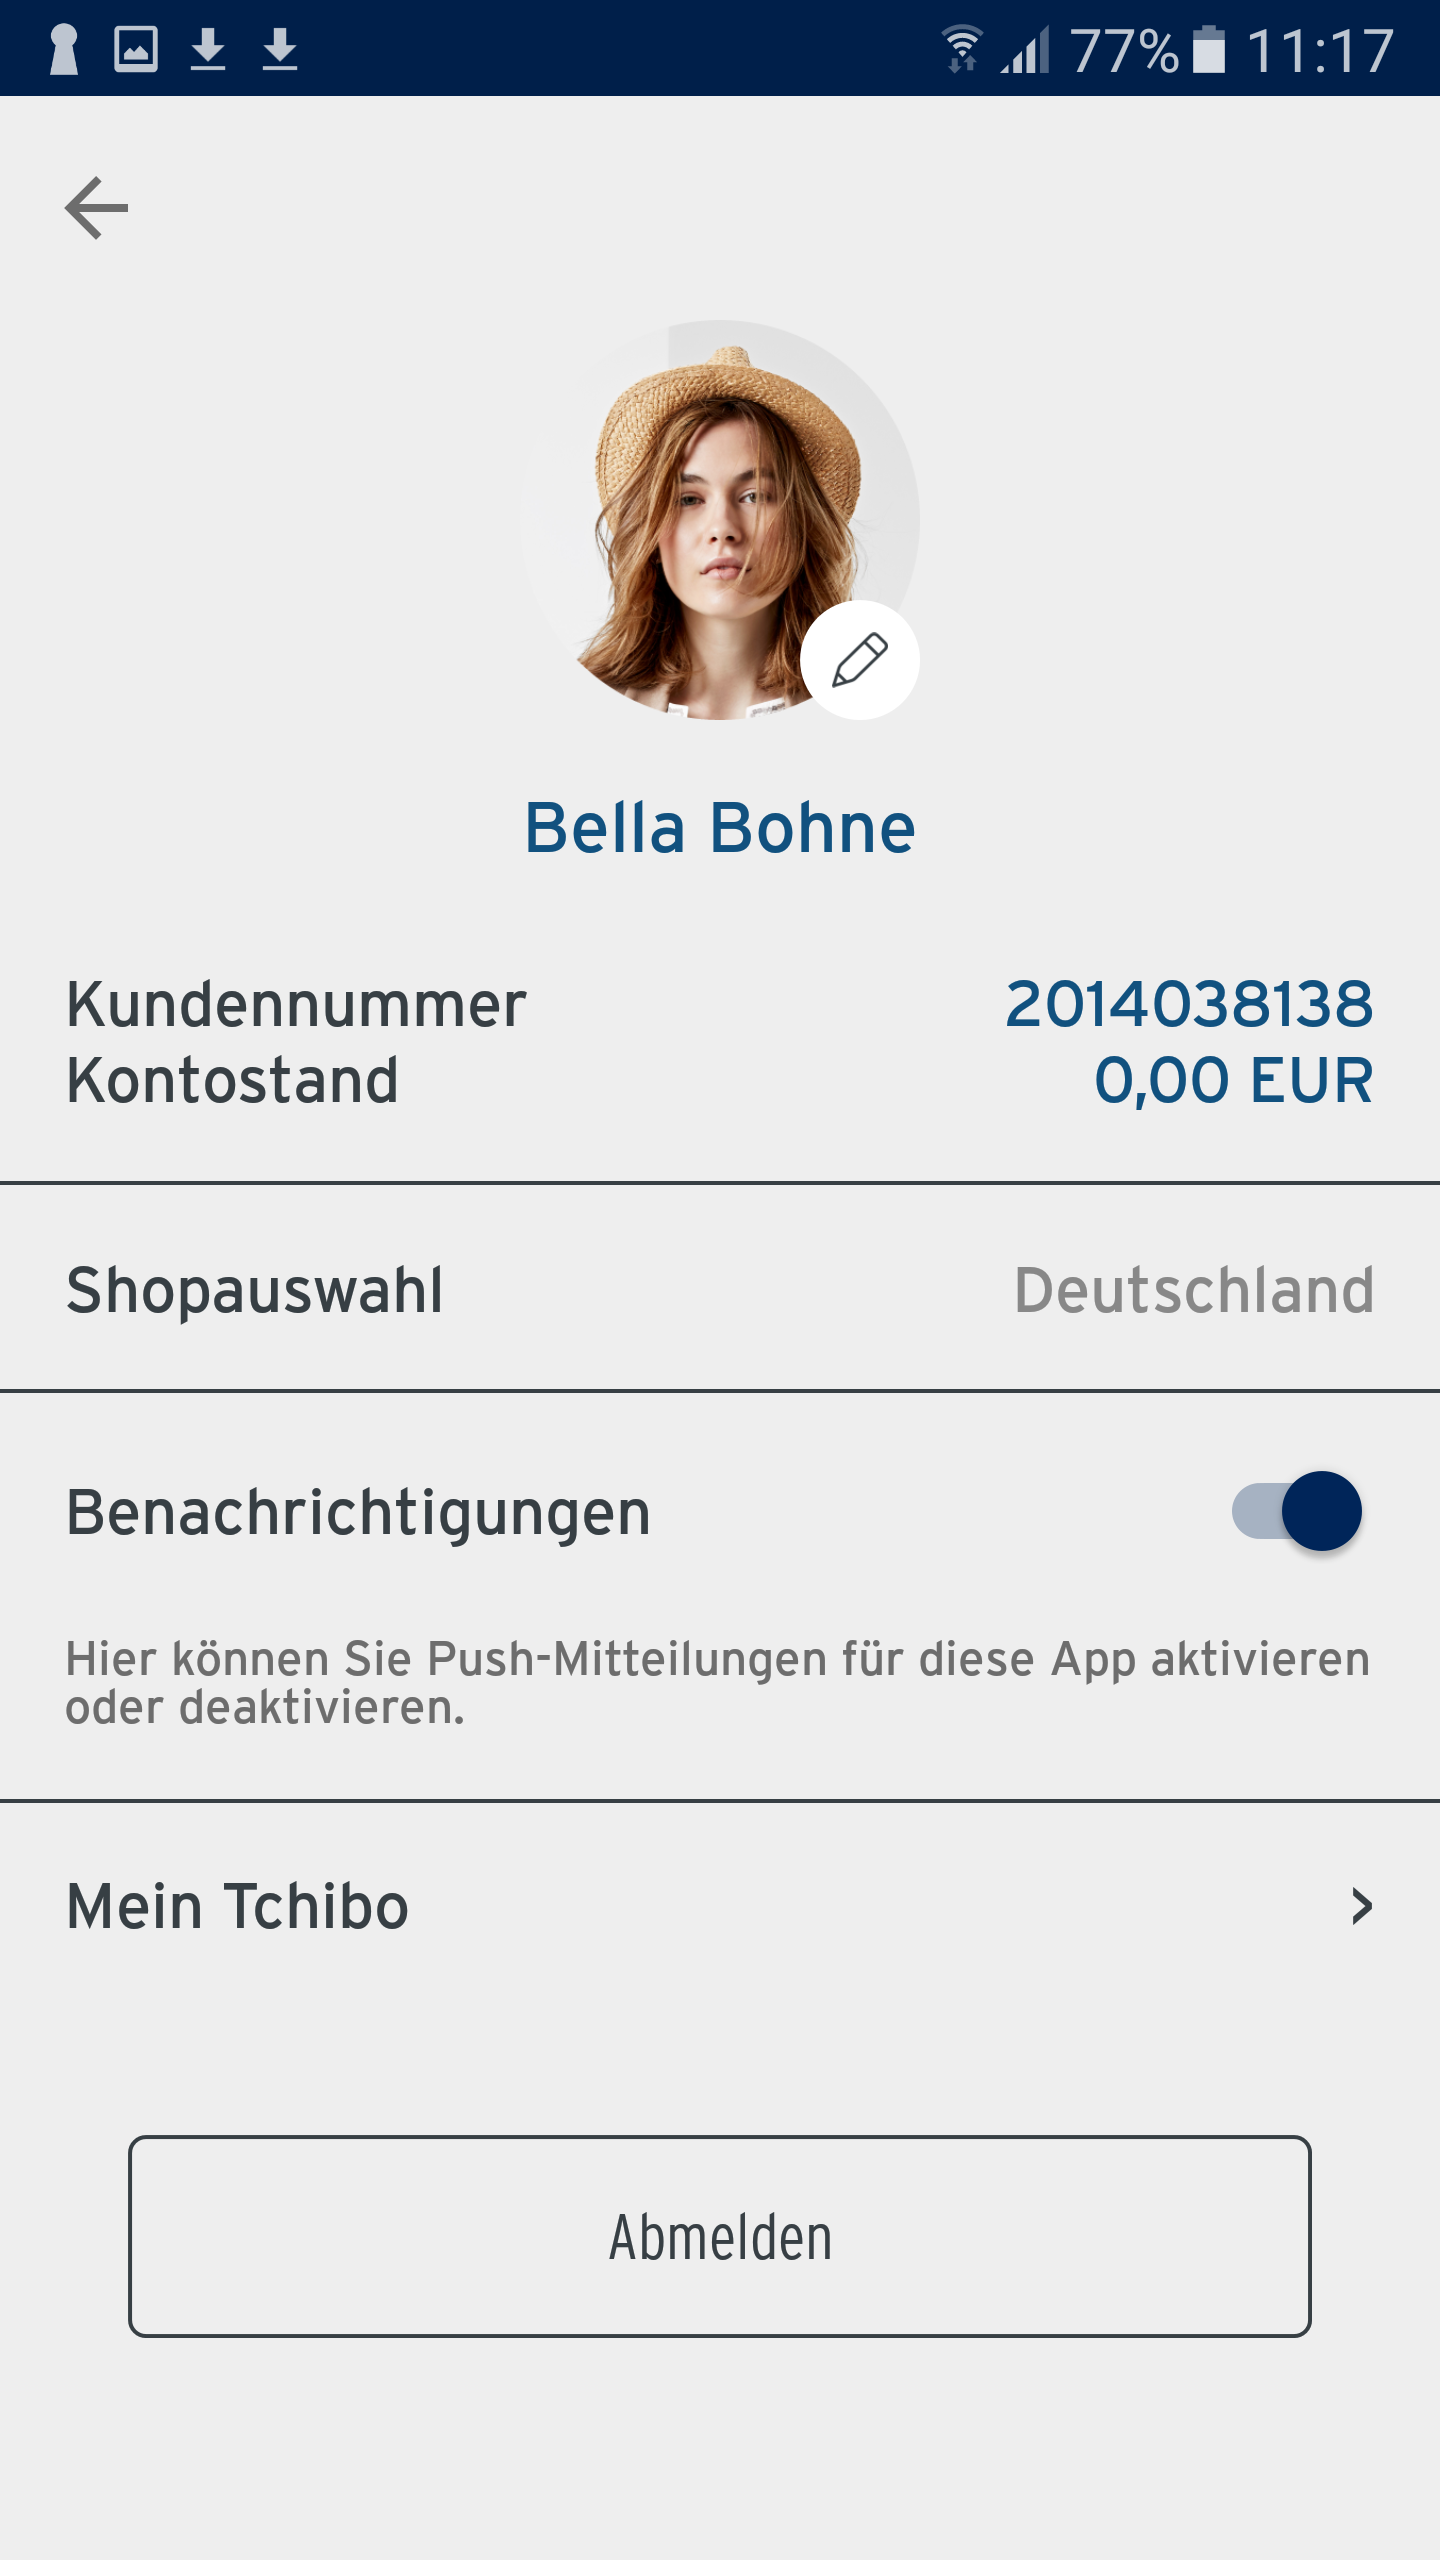 Android application Tchibo - Mode, Wohnen, Lifestyle & Kaffee screenshort